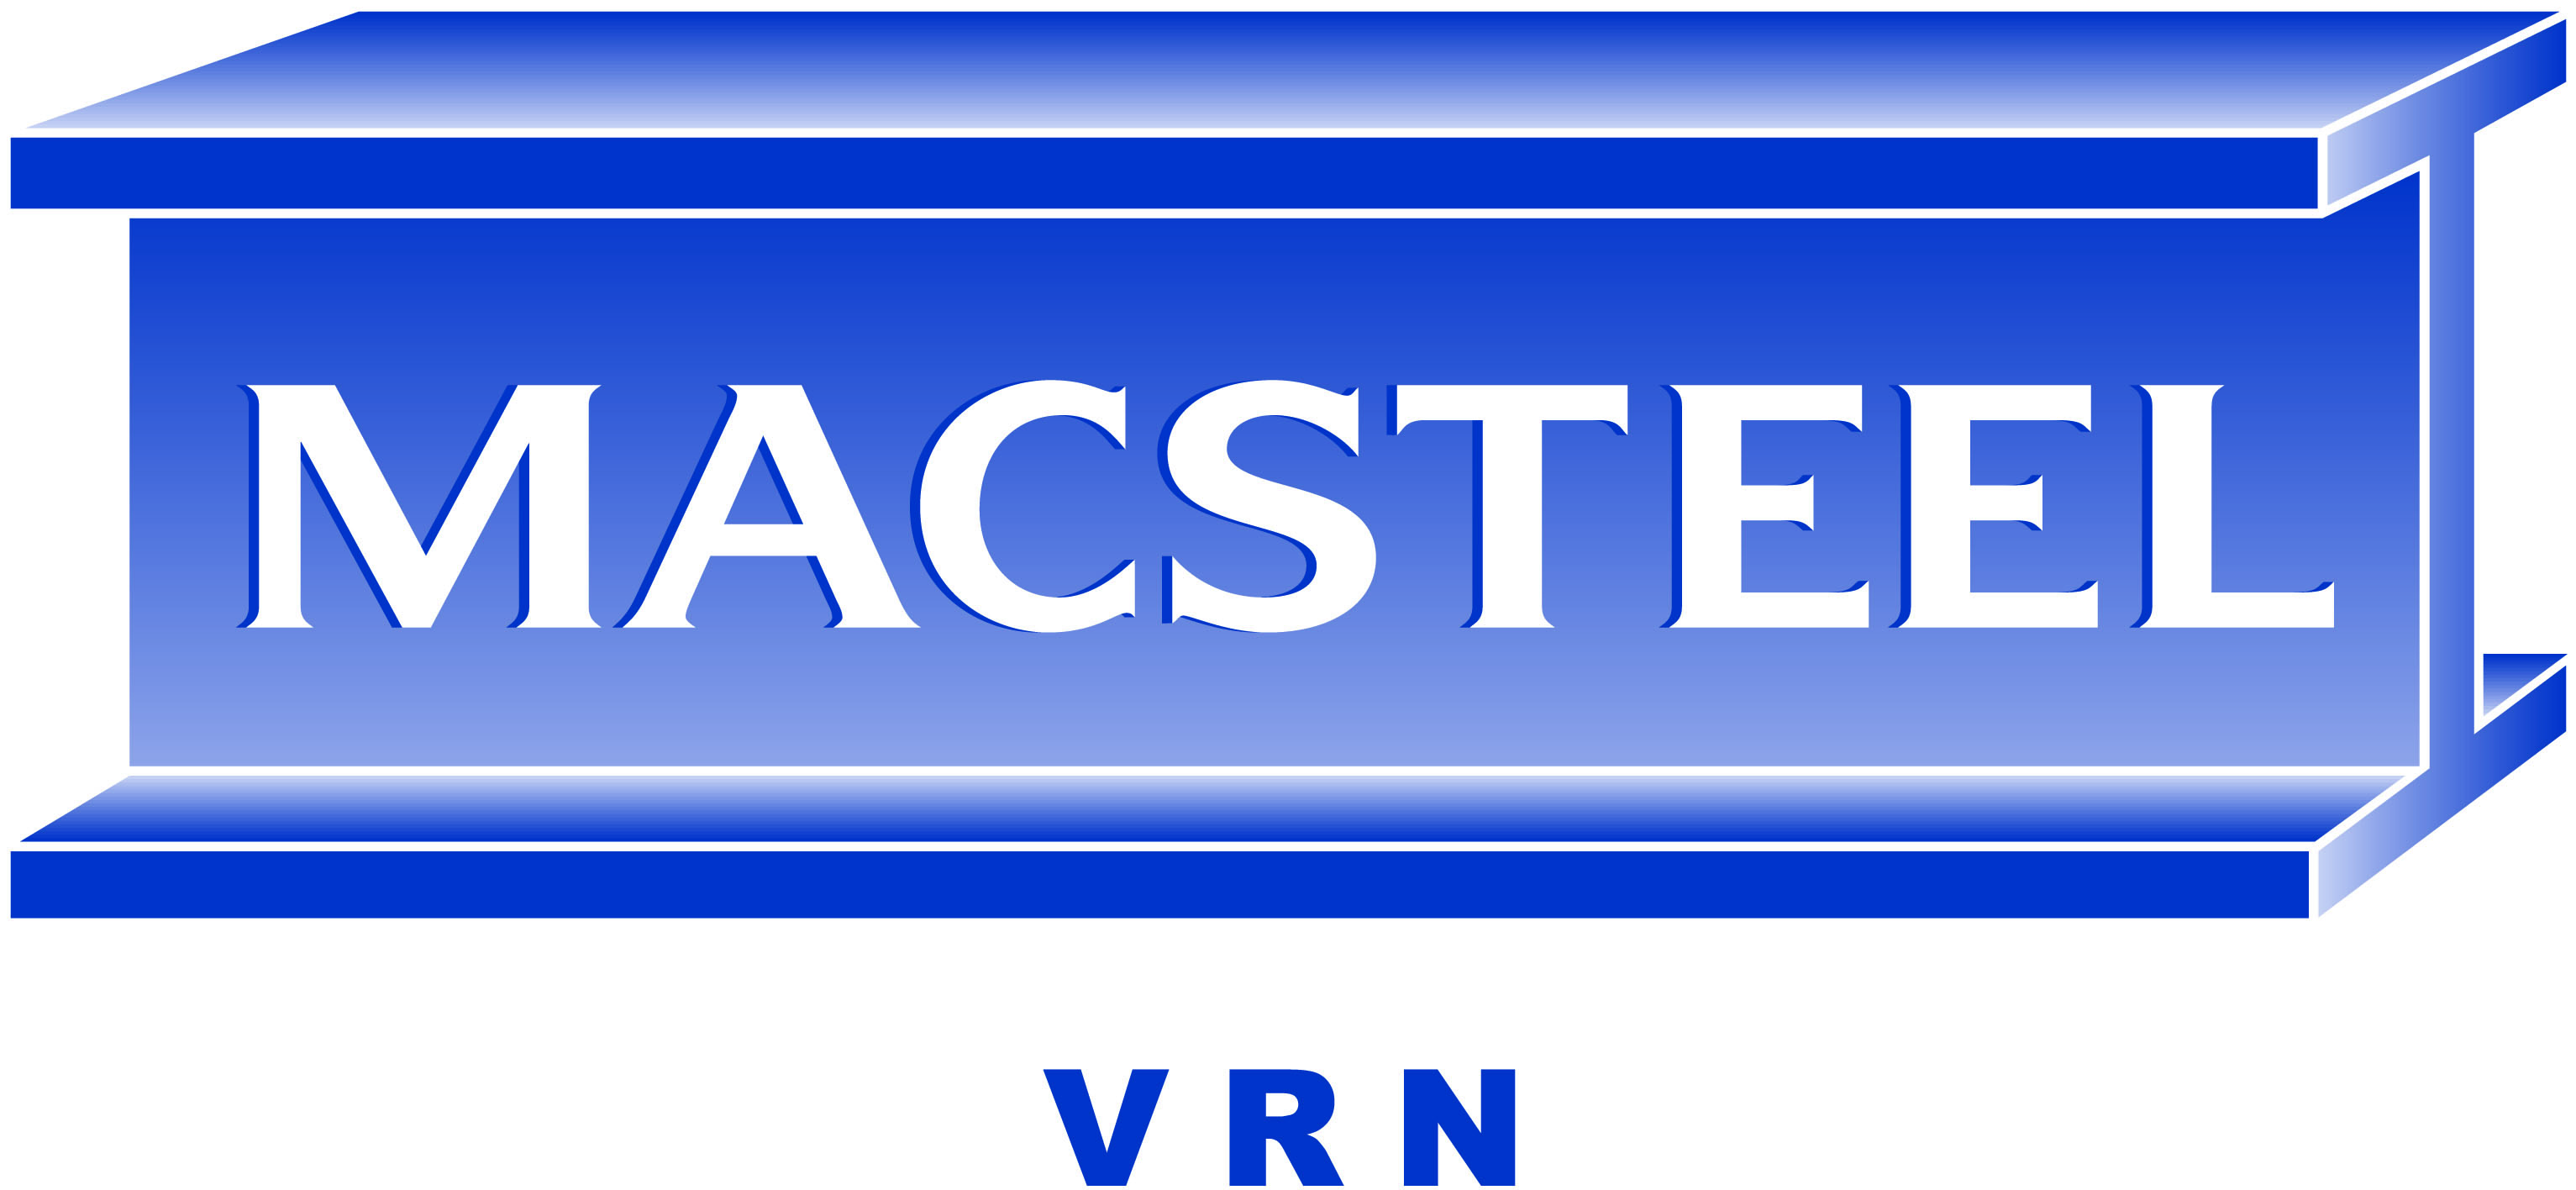 Macsteel VRN - Reef logo